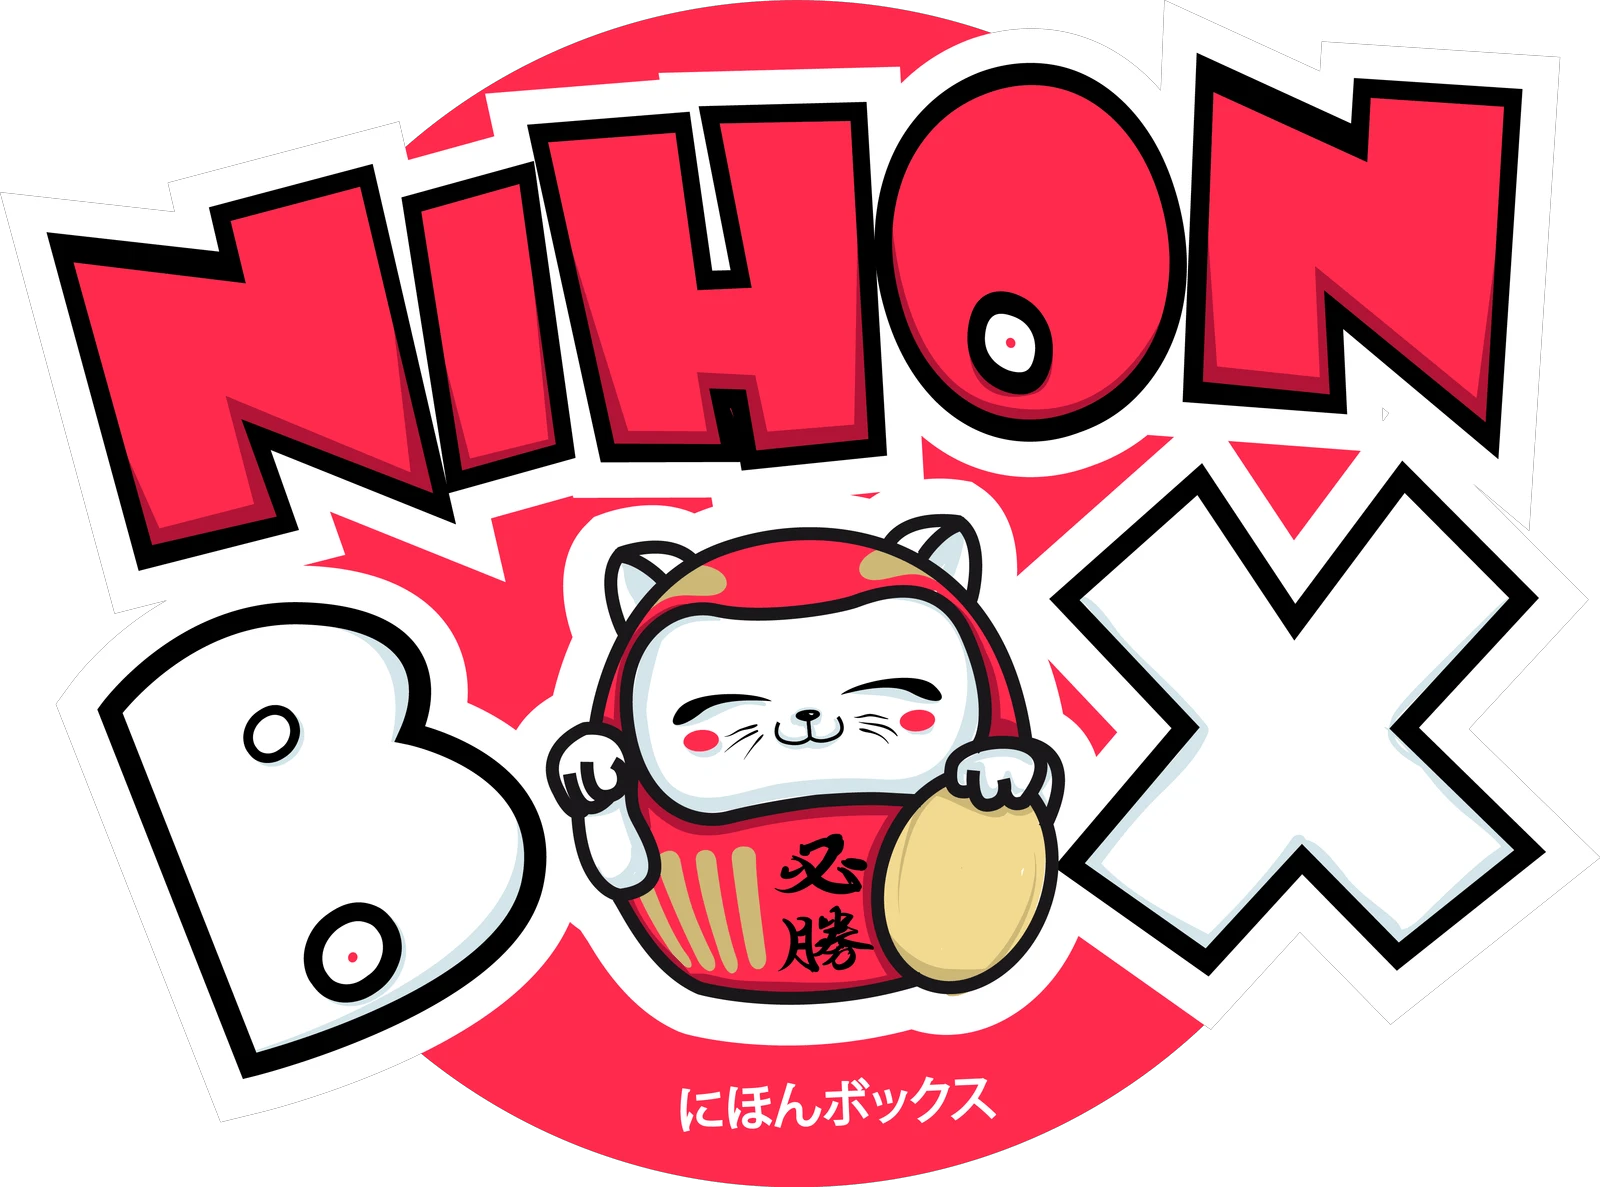  Code Promo Nihonbox